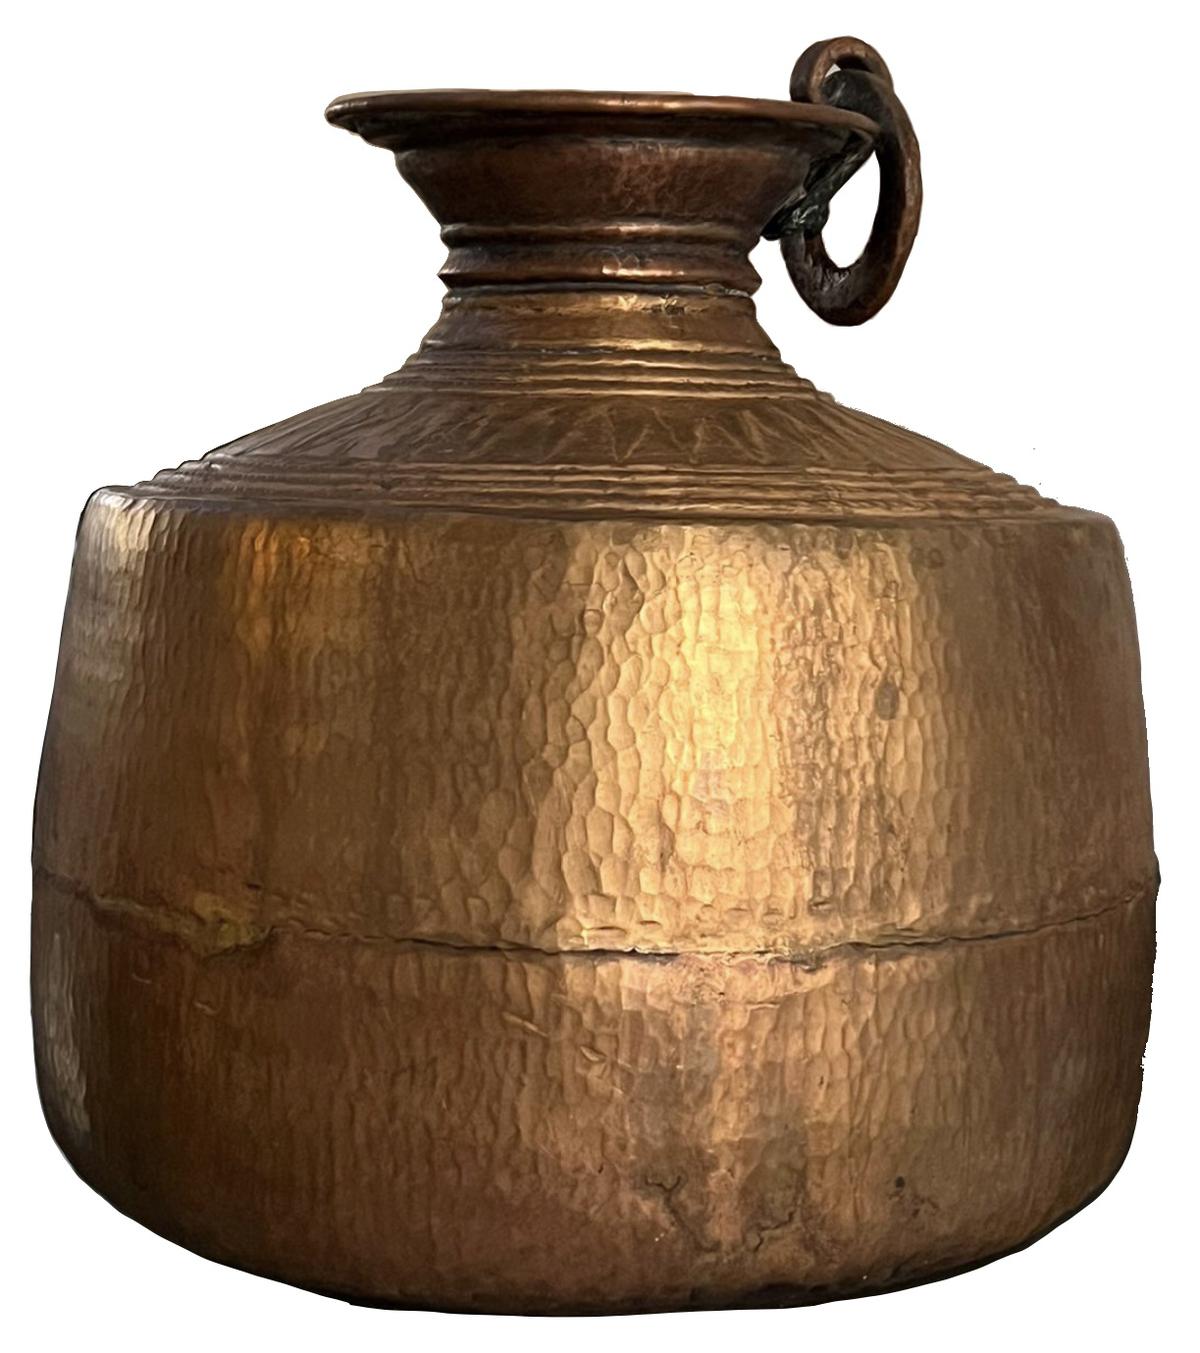 hammered copper pot